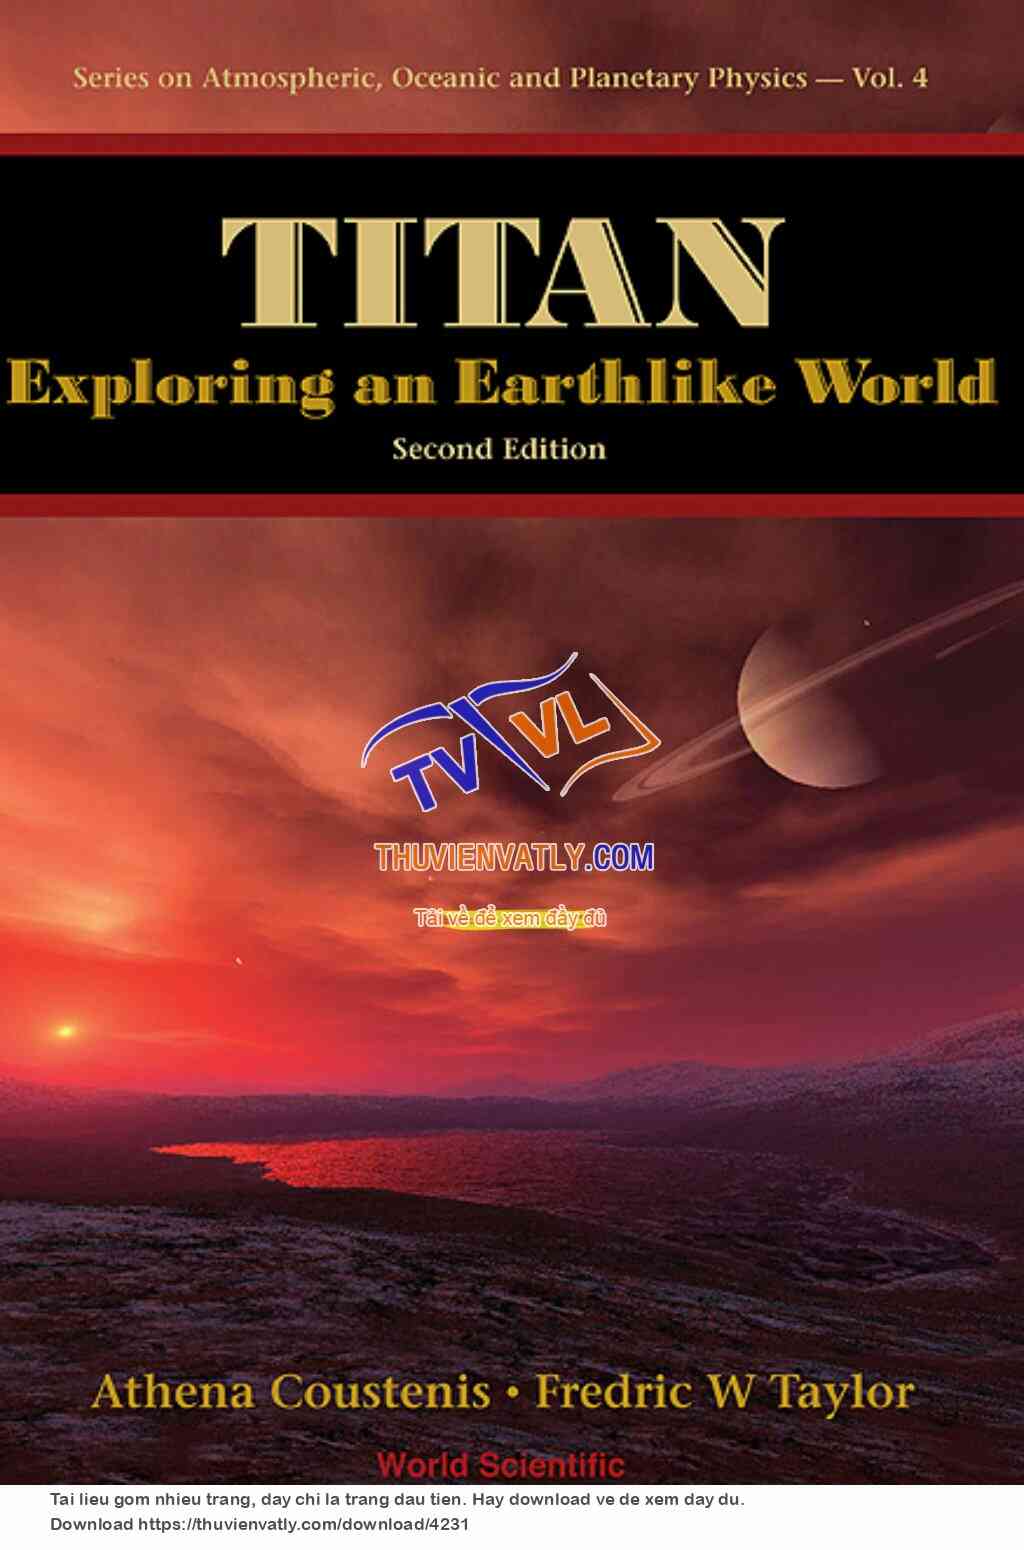 Titan - Exploring an Earthlike World